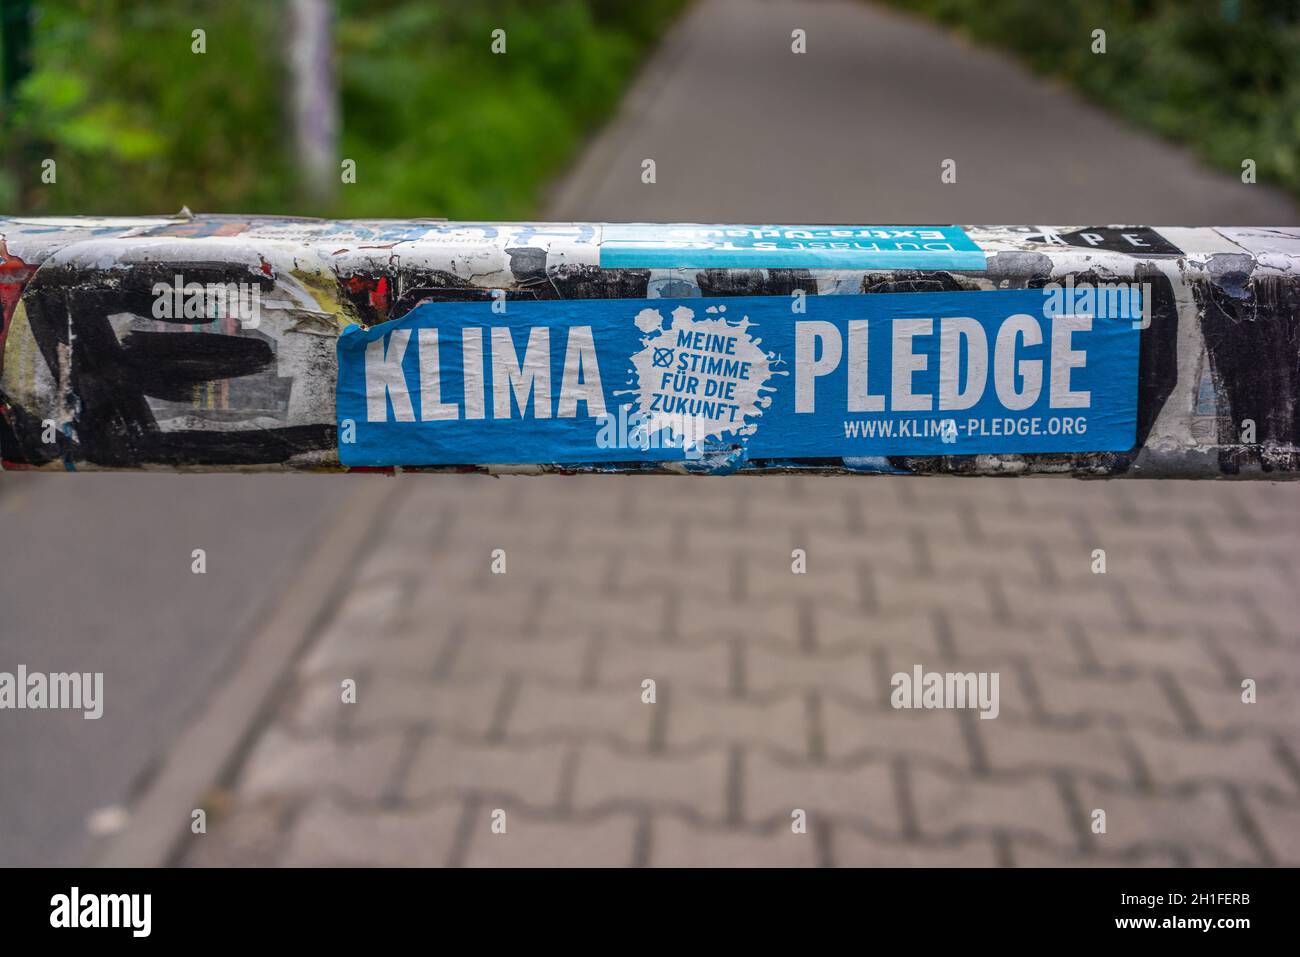 Klima Promdge - etiqueta de campaña de promesas de cambio climático, Berlín, Alemania, Europa Foto de stock